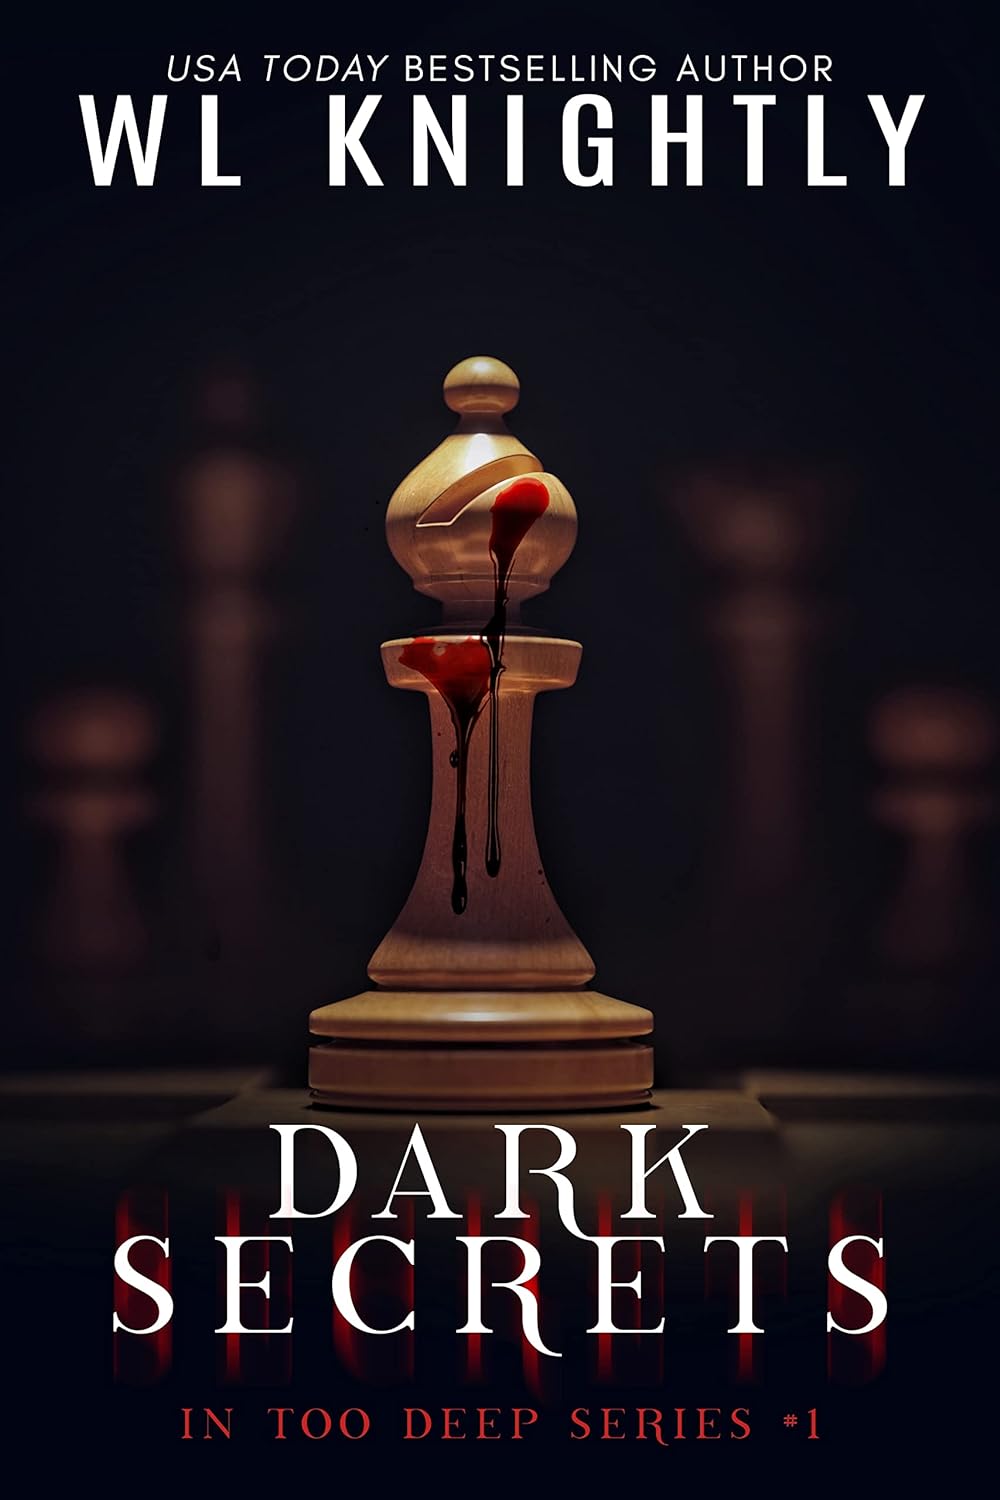 Dark Secrets